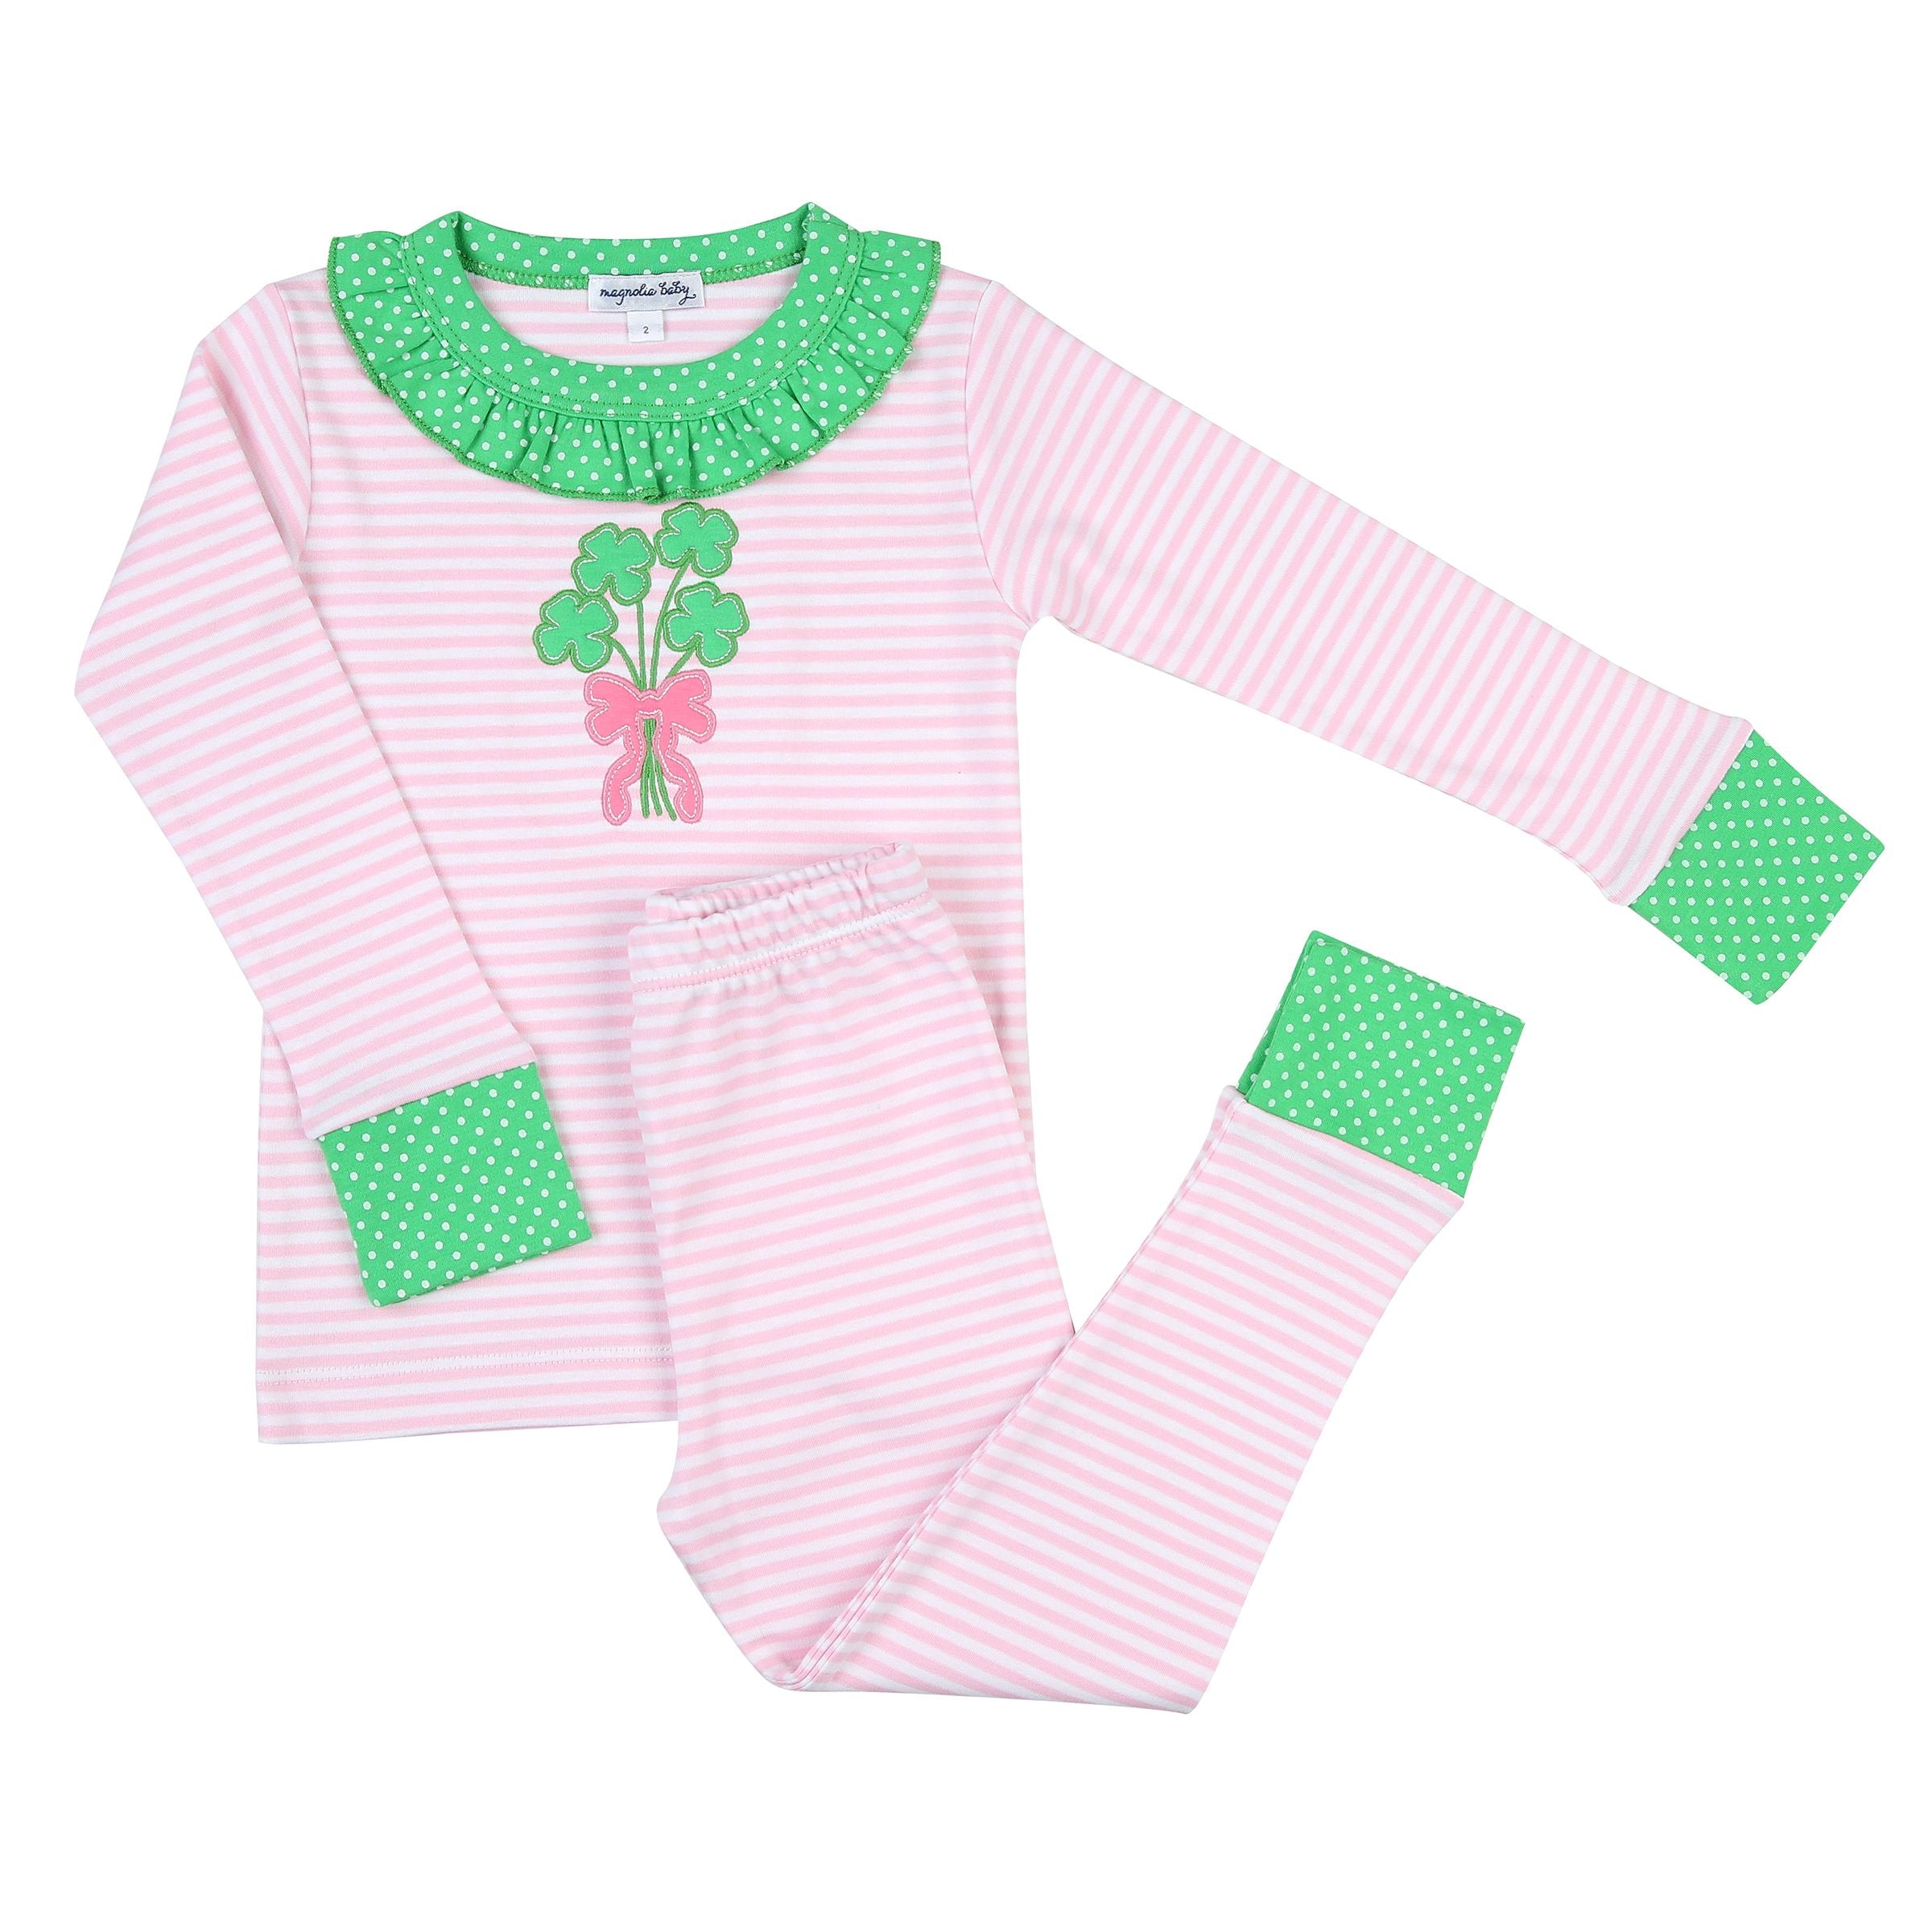 Magnolia Baby Little Girls Happy Birthday Short Pajamas - Pink